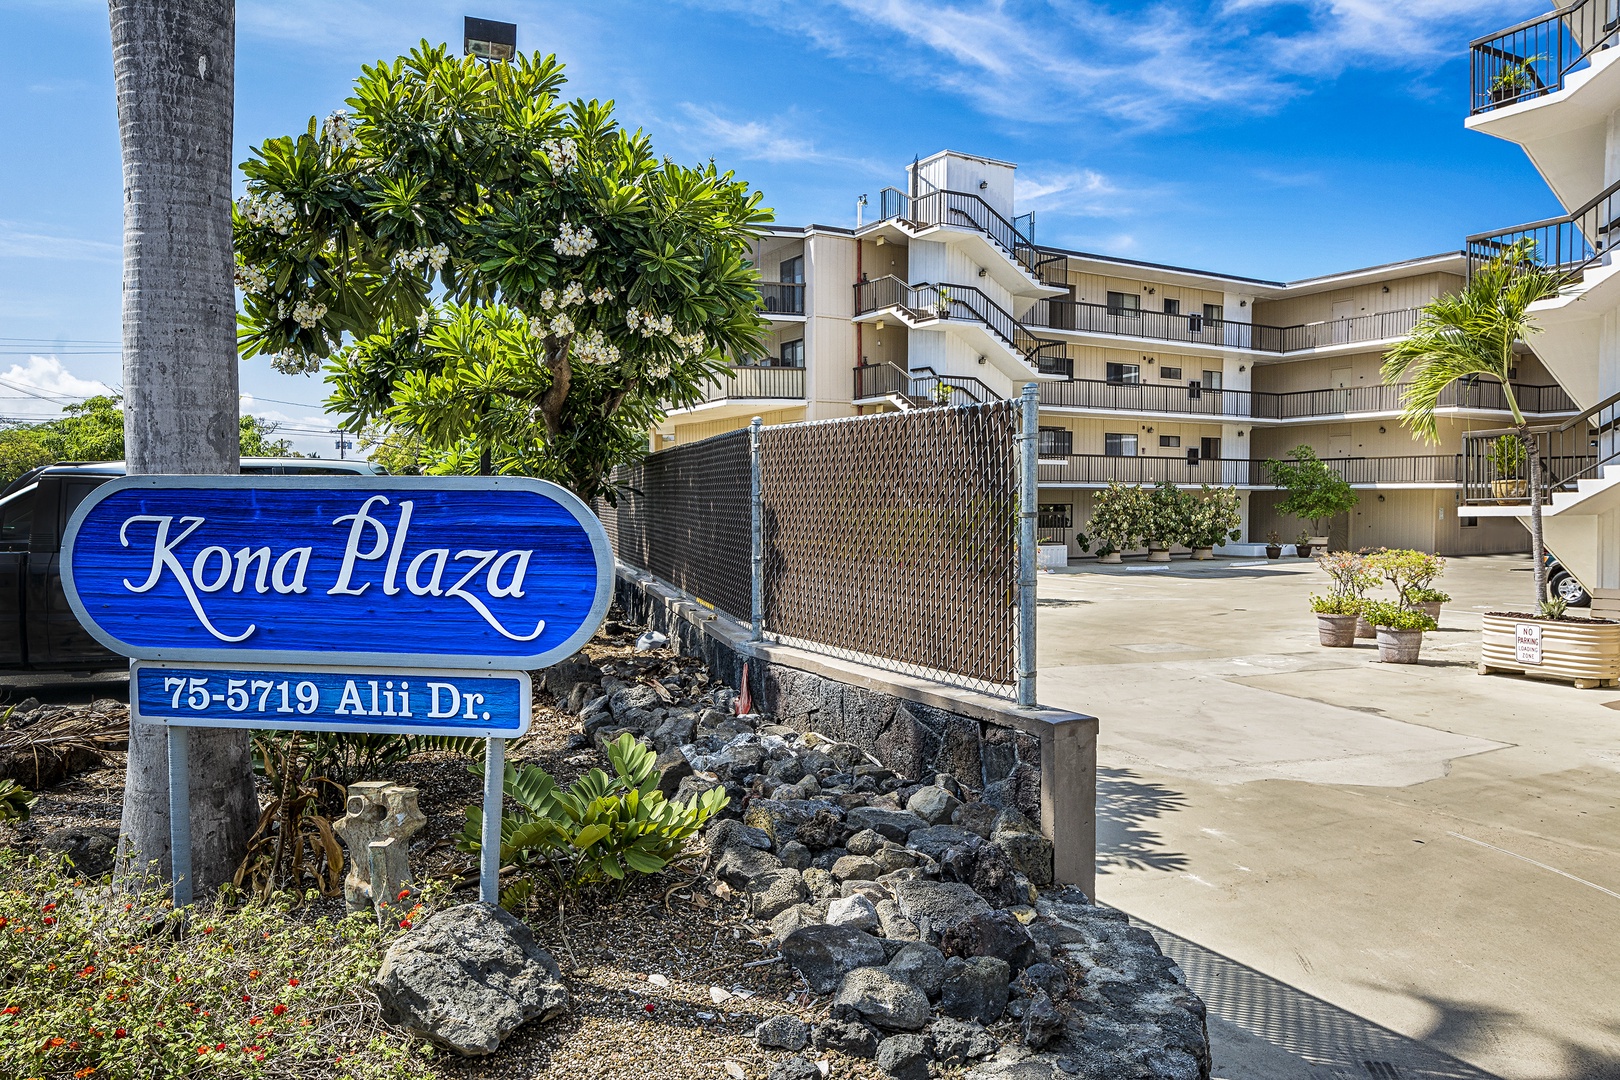 Kailua Kona Vacation Rentals, Kona Plaza 201 - Kona Plaza Complex